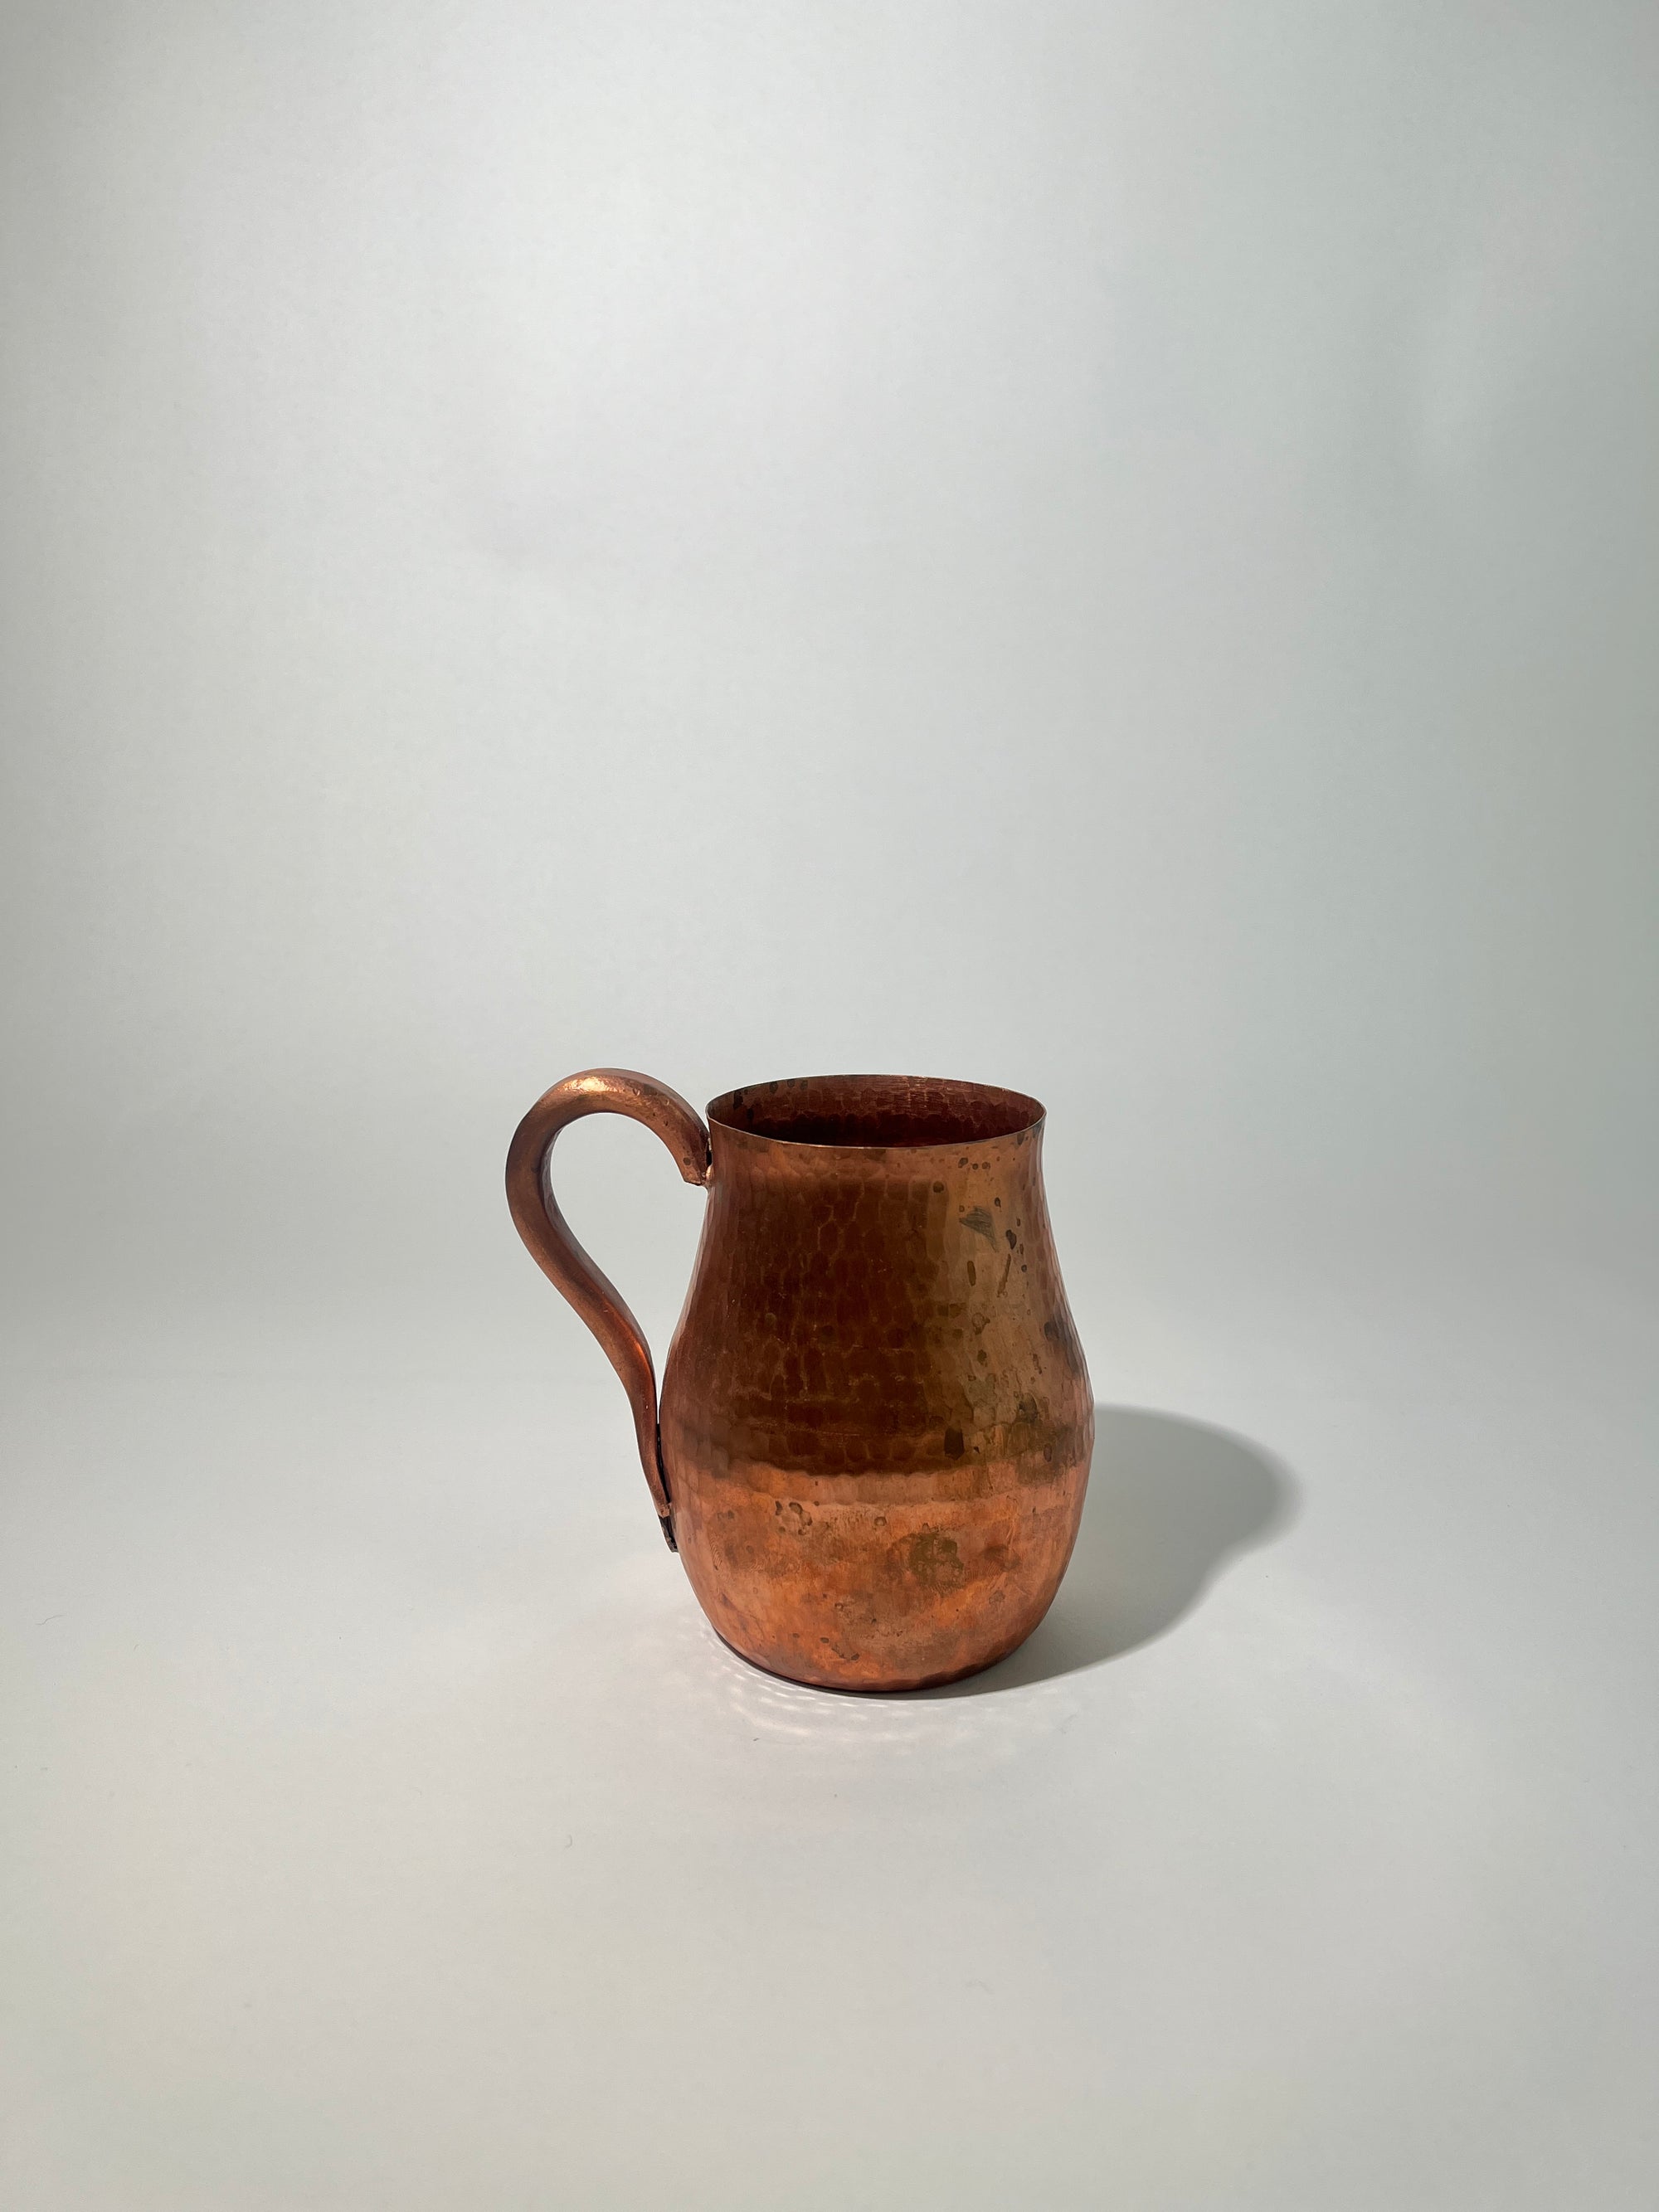 Hammered Copper Mugs